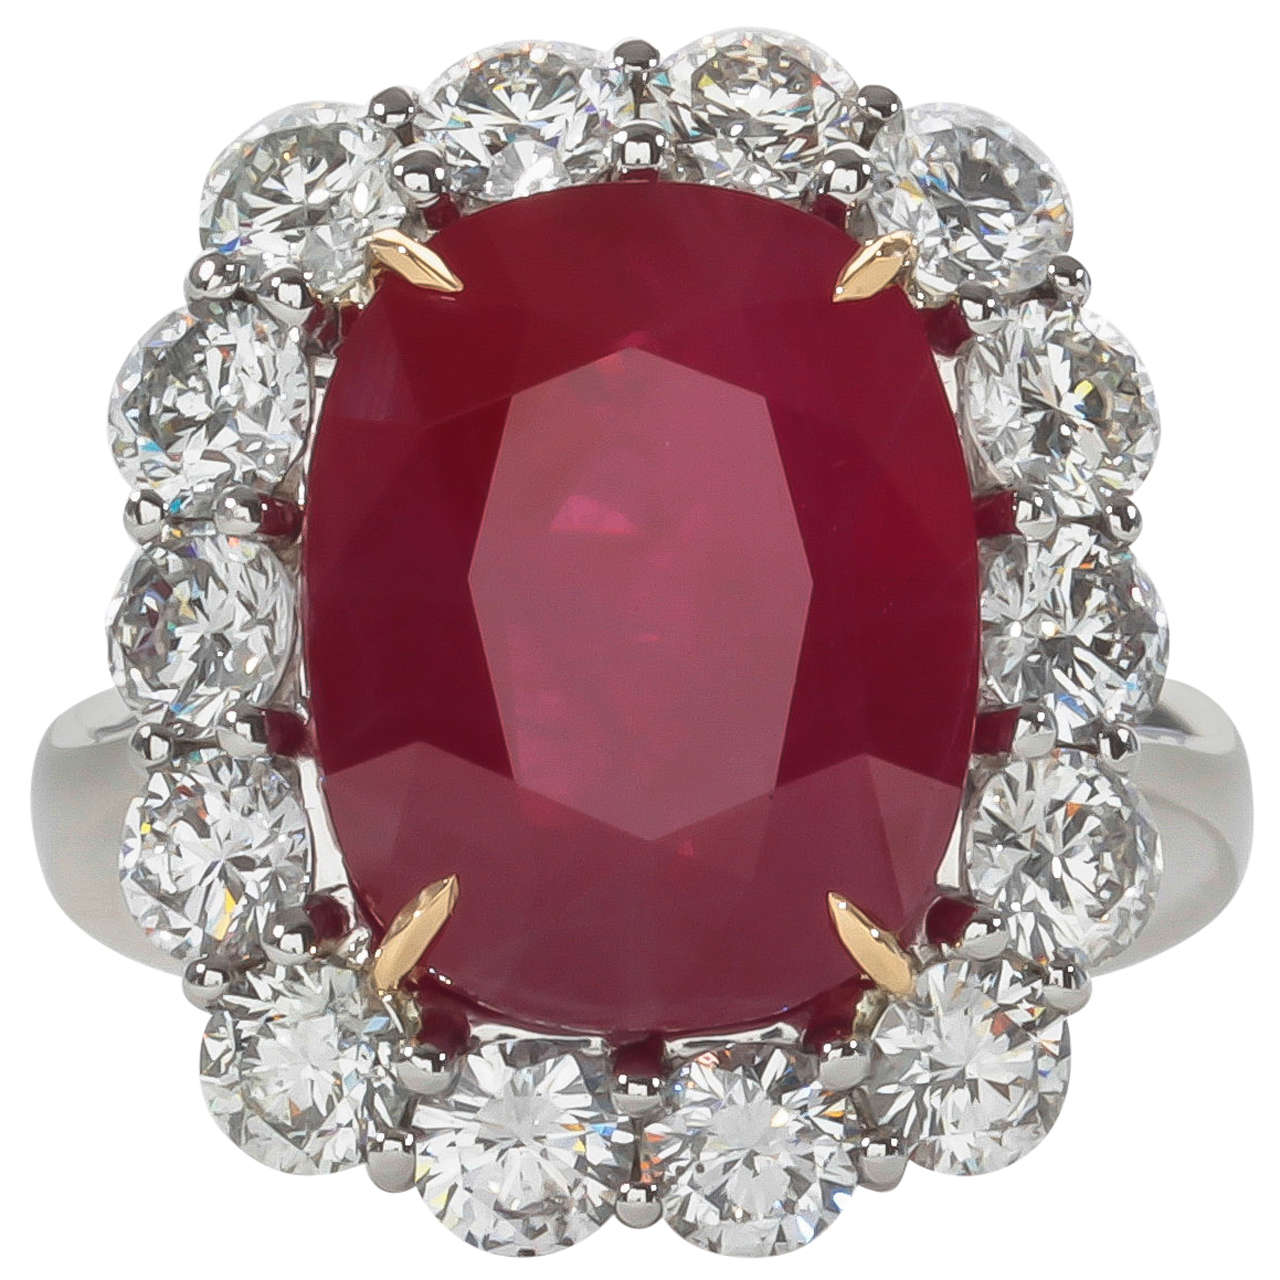 Rare 10 Carat Burma Ruby Diamond Ring For Sale